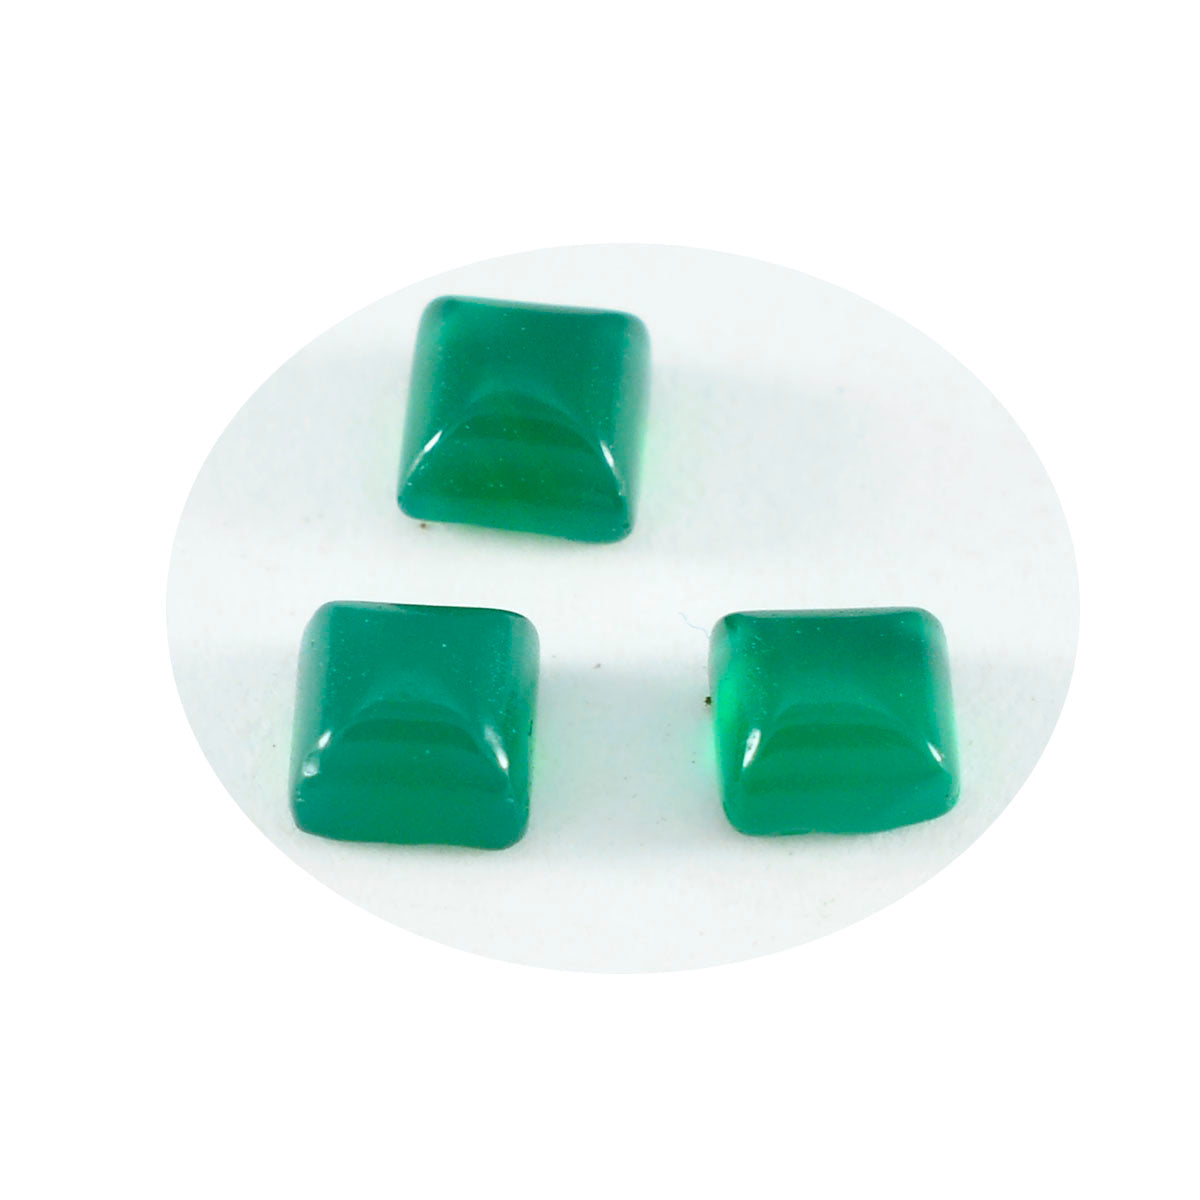 riyogems 1st grön onyx cabochon 7x7 mm fyrkantig form fin kvalitet lös sten